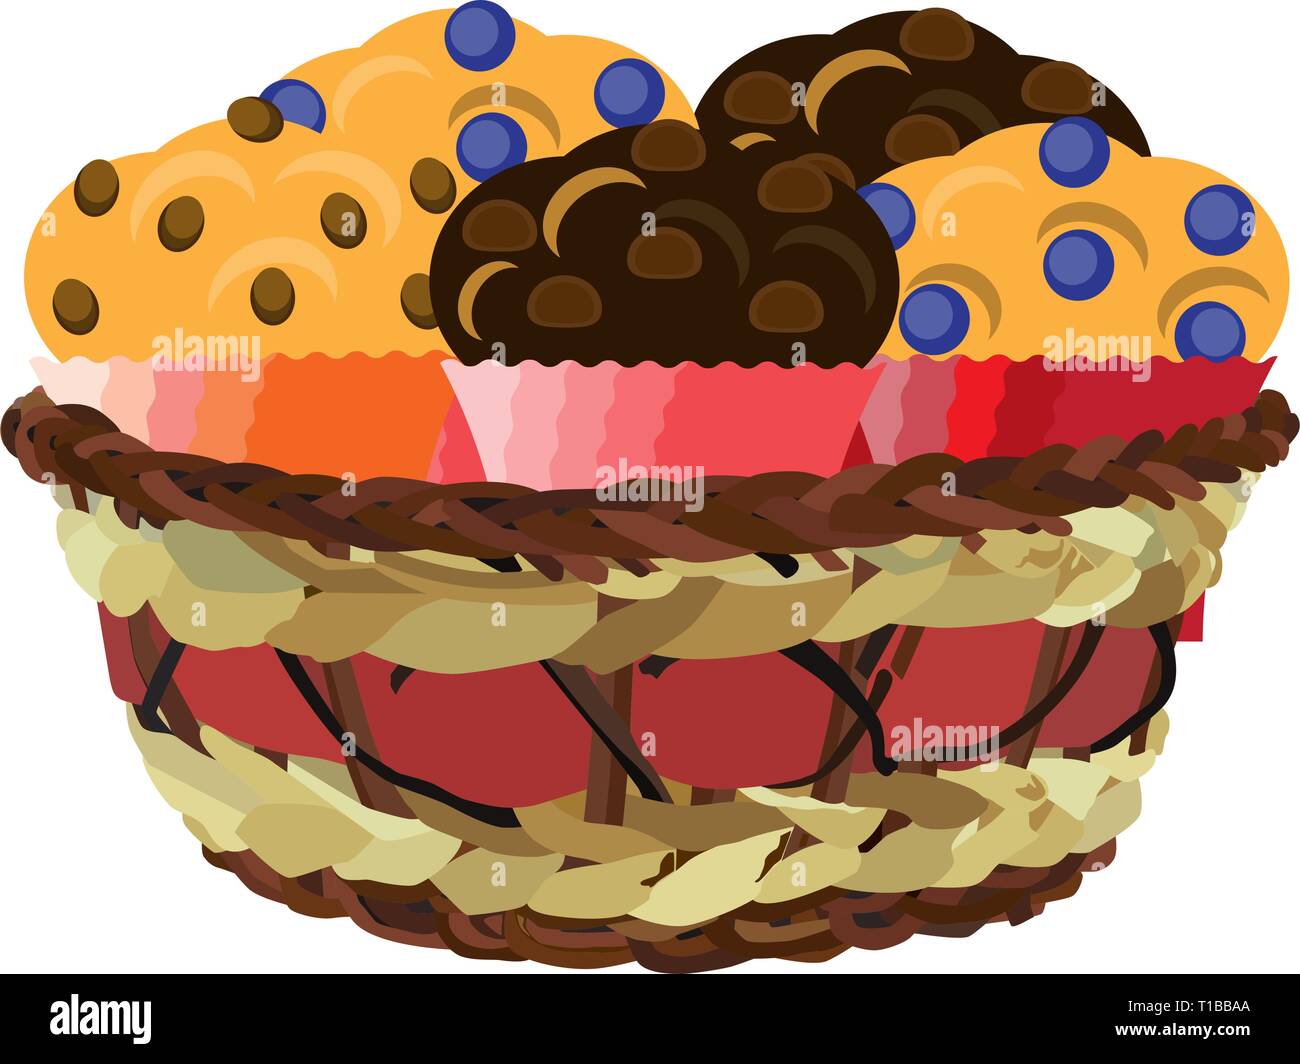 Weidenkorb mit Muffins, Vektor flachbild Abbildung Stock Vektor